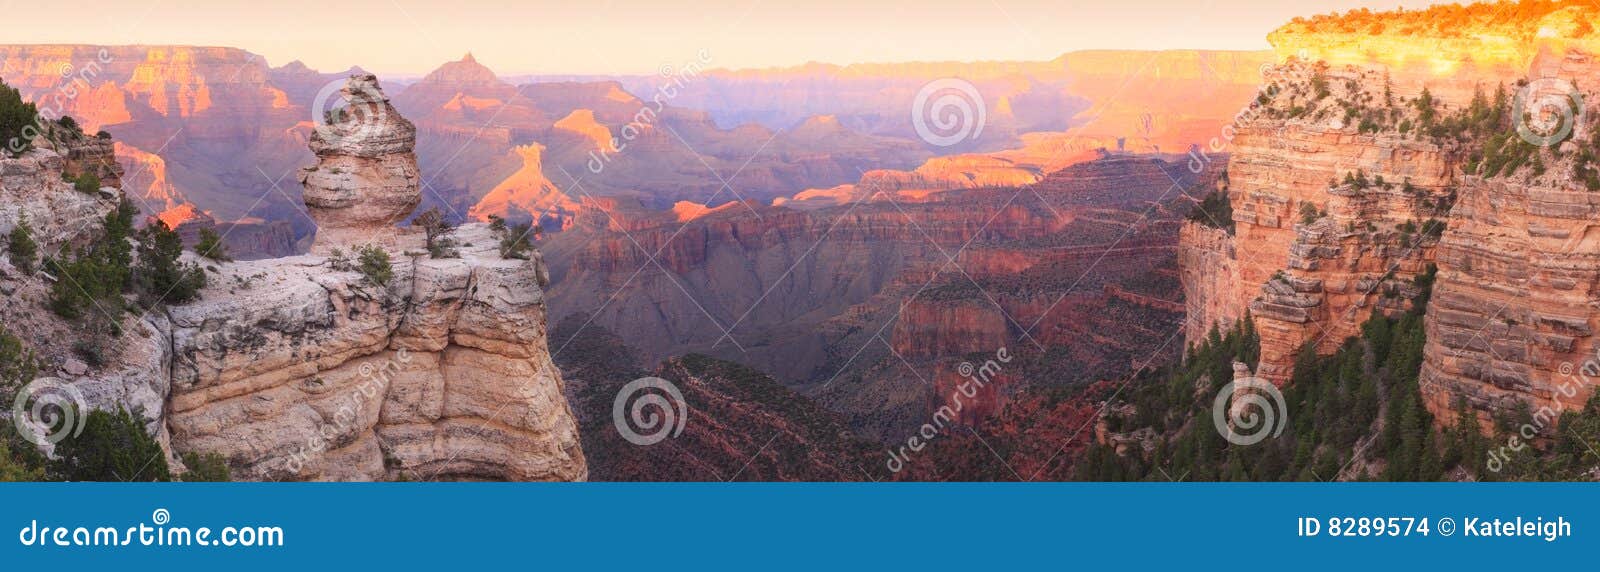 grand canyon sunset panorama